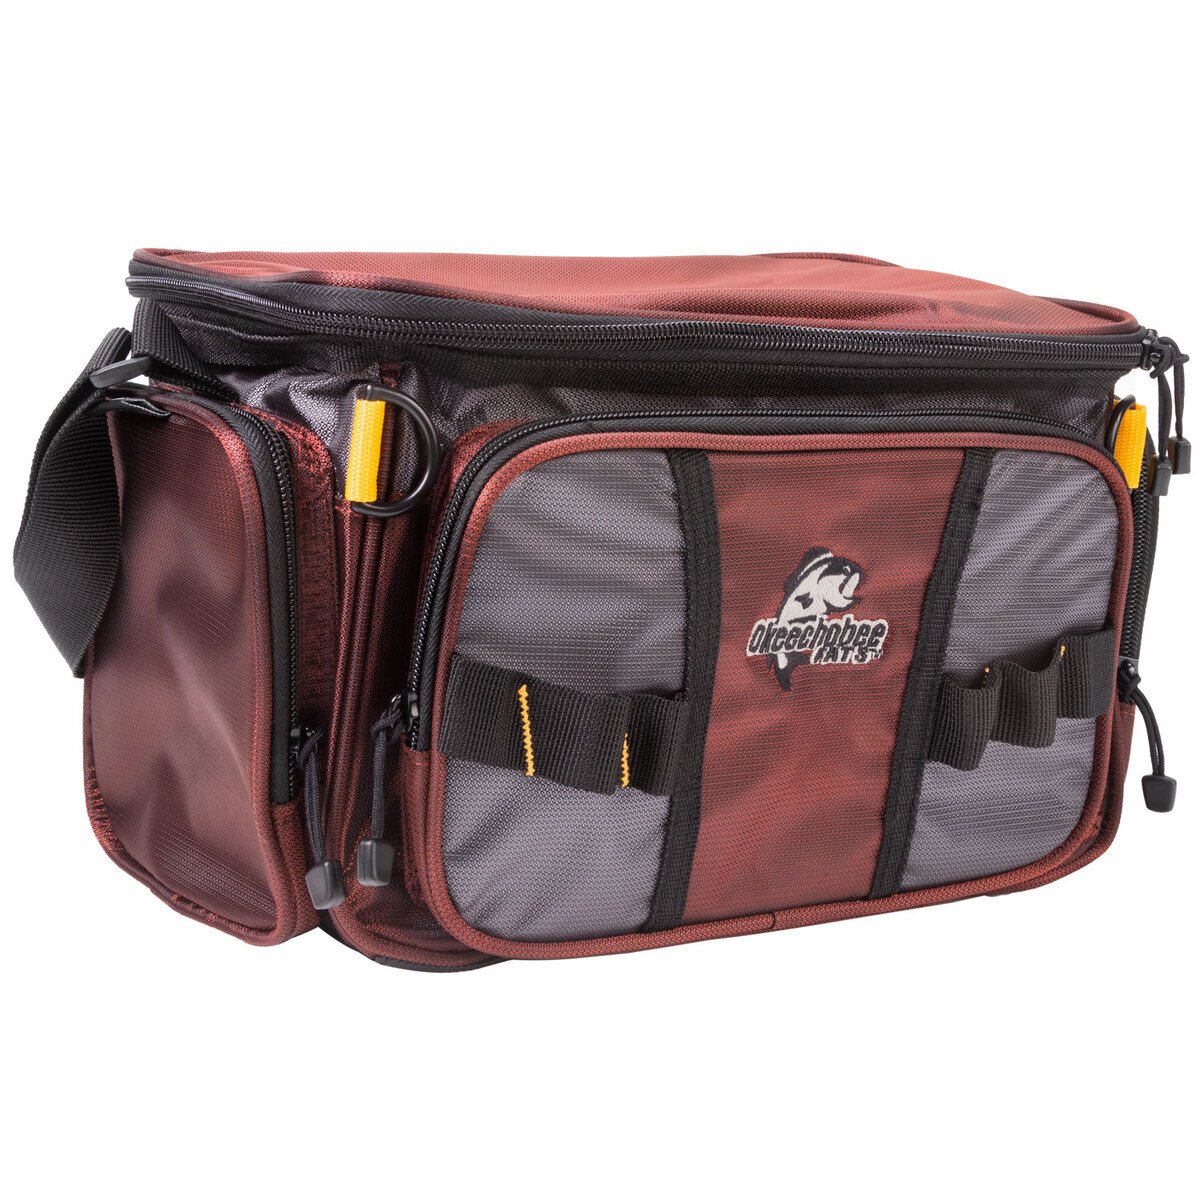 Multi-functional Large Capacity Fishing Backpack Outdoor Travel Camping Fishing Rod Reel Tackle Bag Shoulder Bag Luggage Bag Green